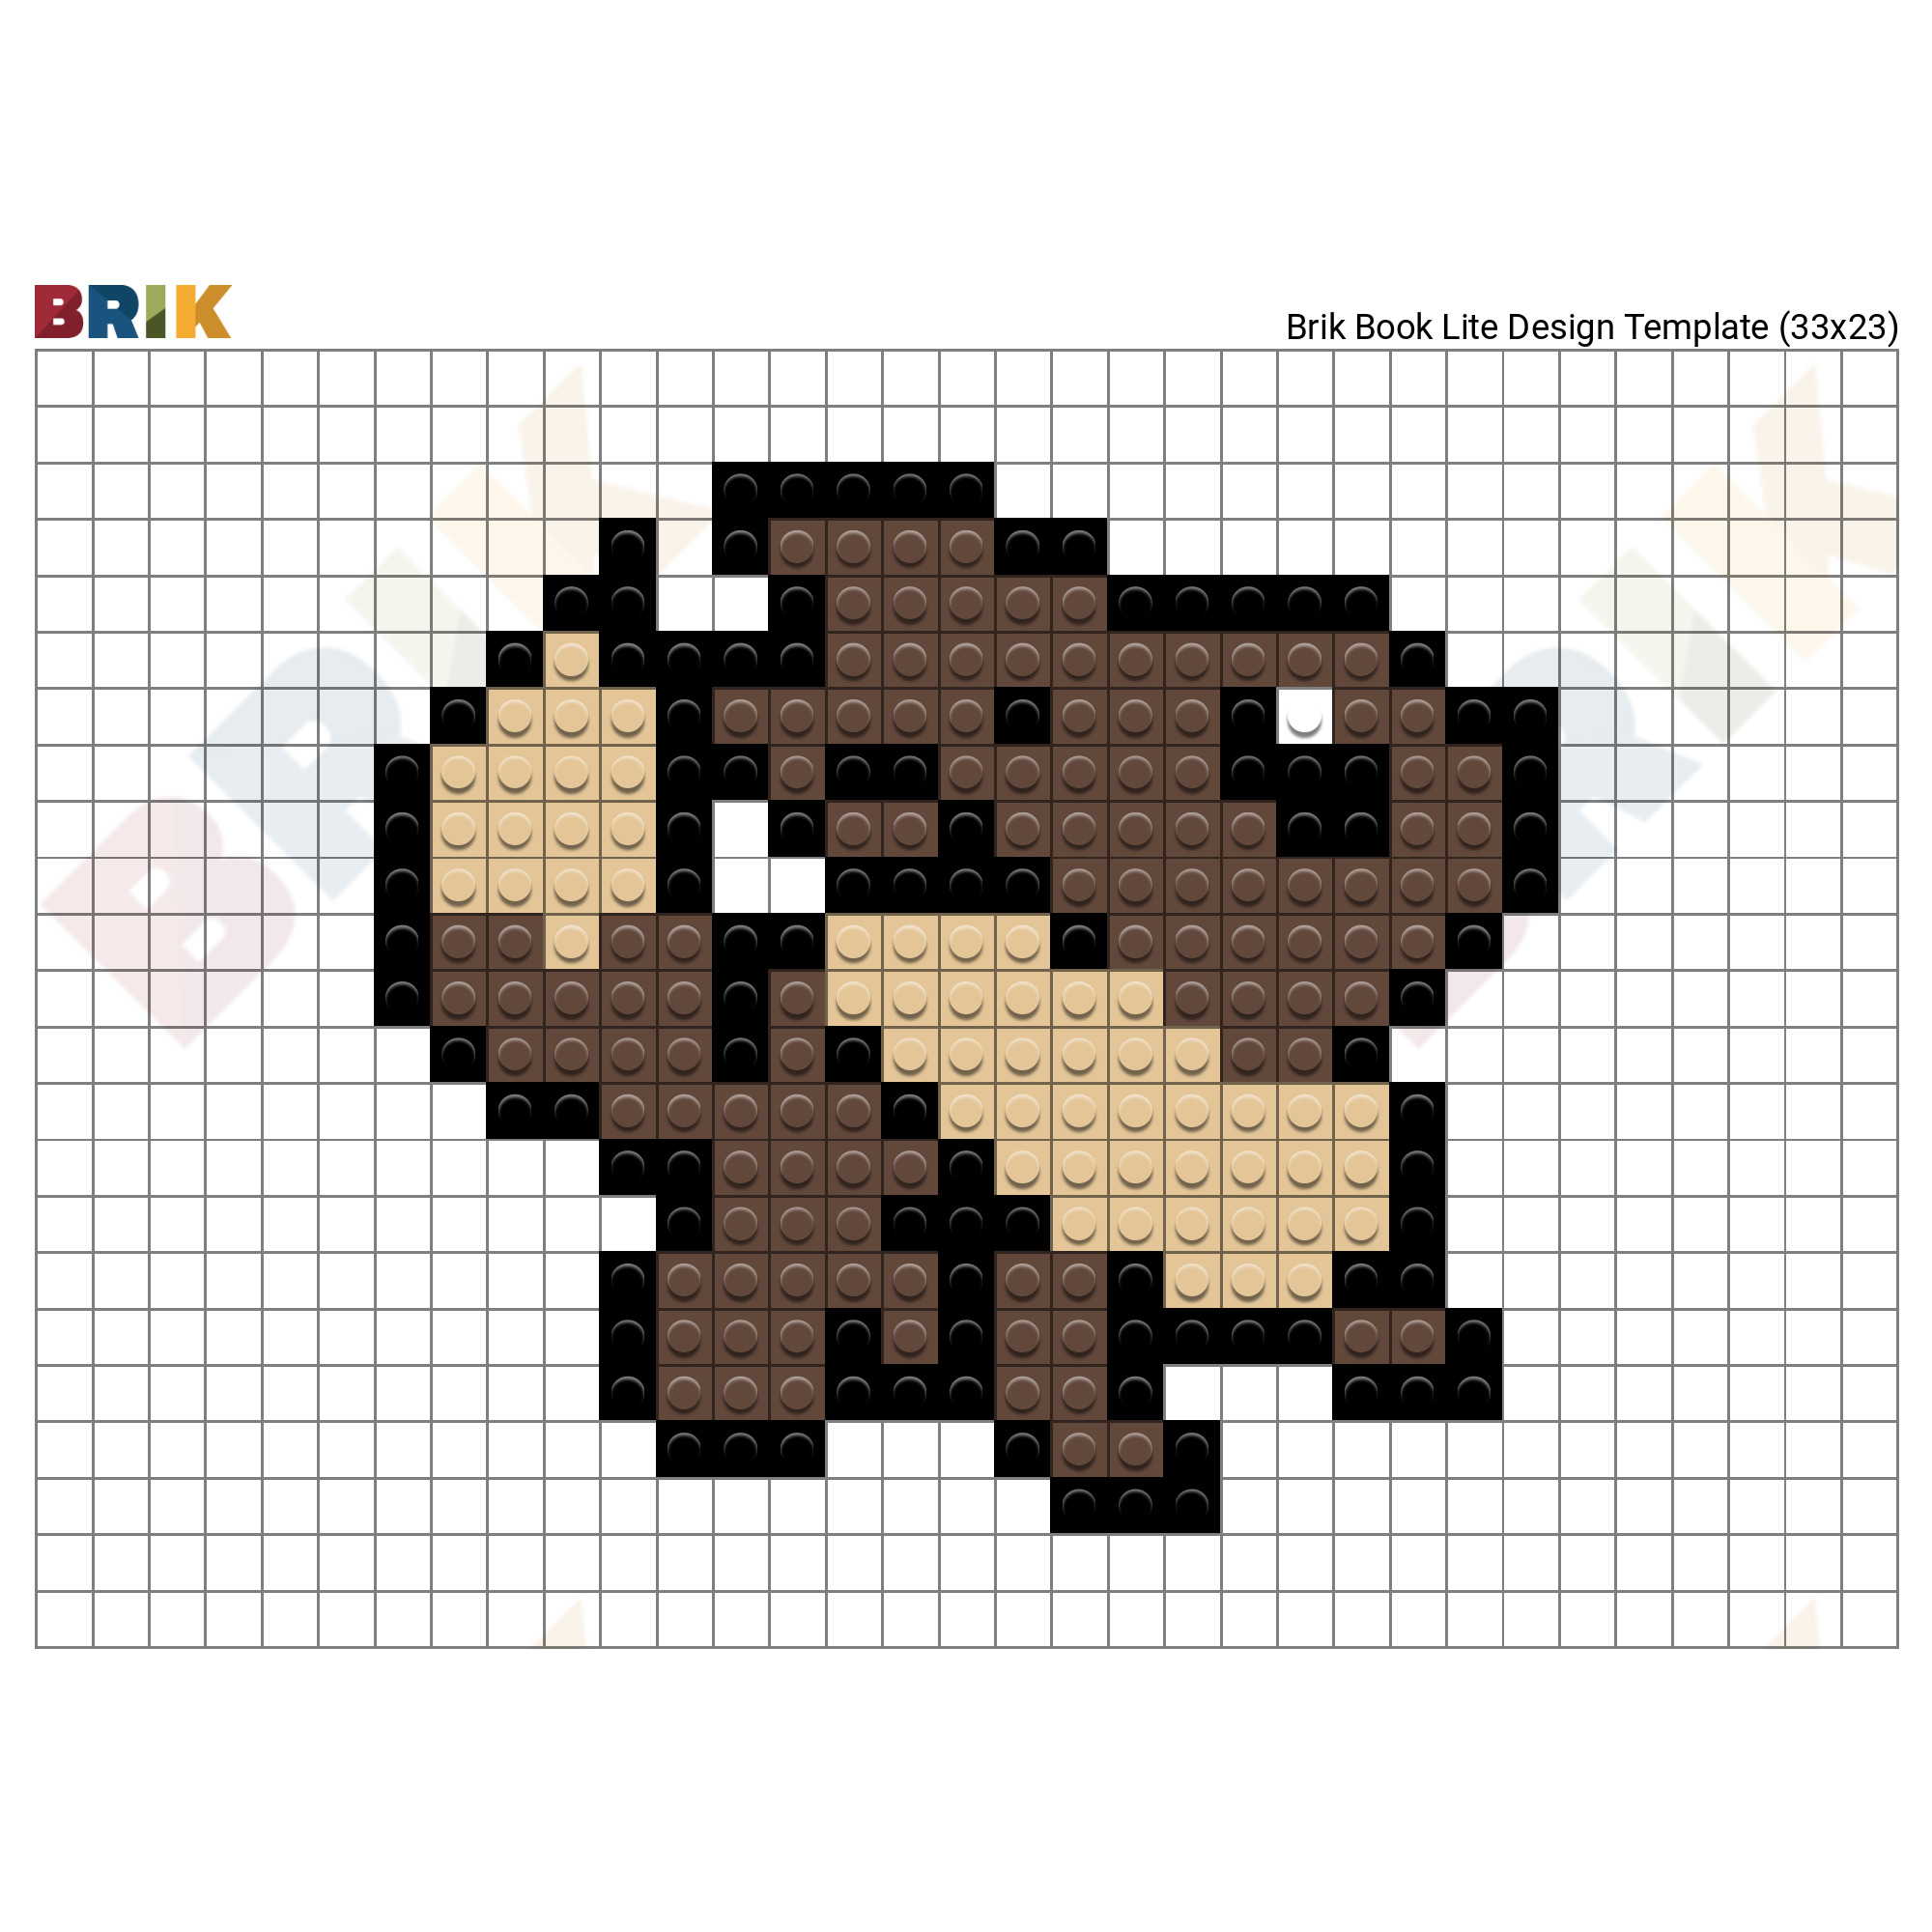 Eevee Pokémon Pixel Art - Pix Brix Instructions 